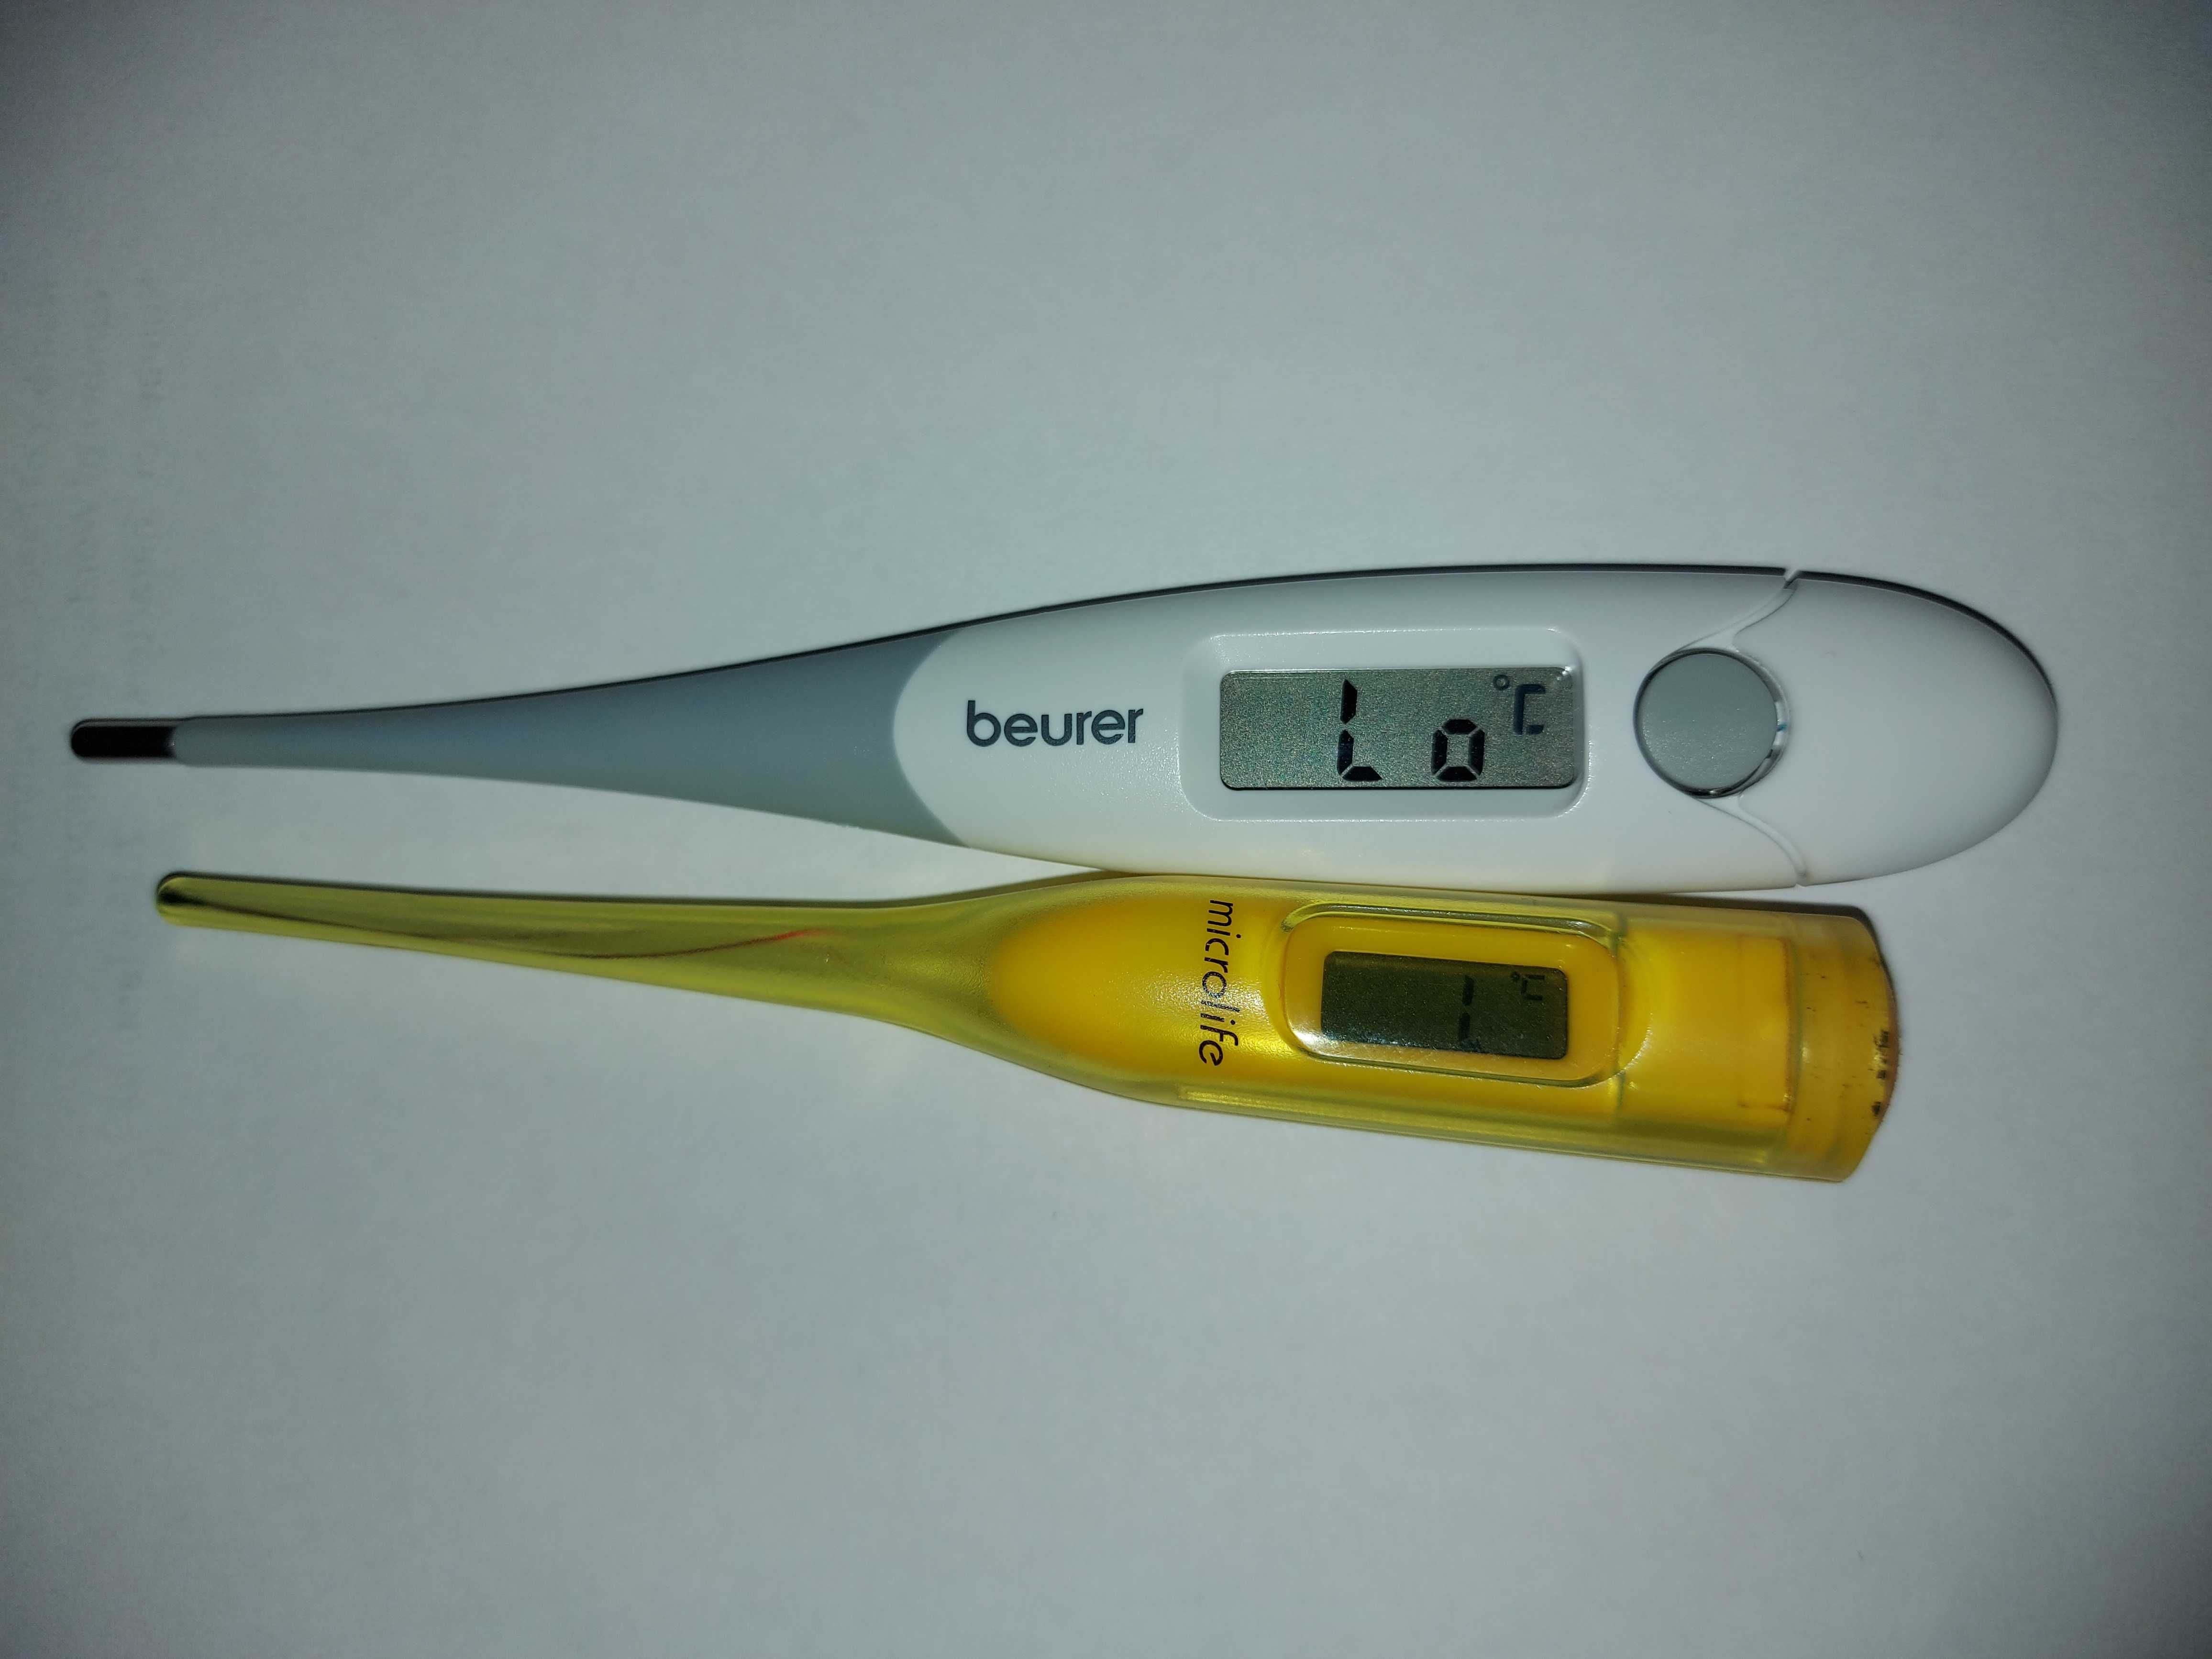 Vand doua termometre electronice Beurer + Microlife (folosite)